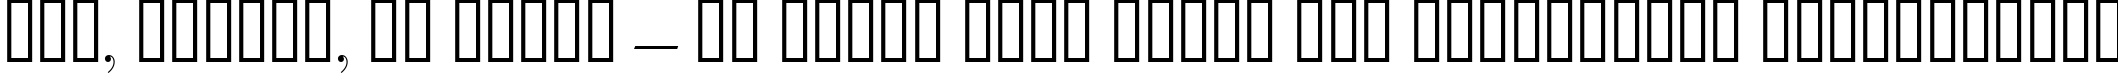 Пример написания шрифтом Bedini текста на украинском